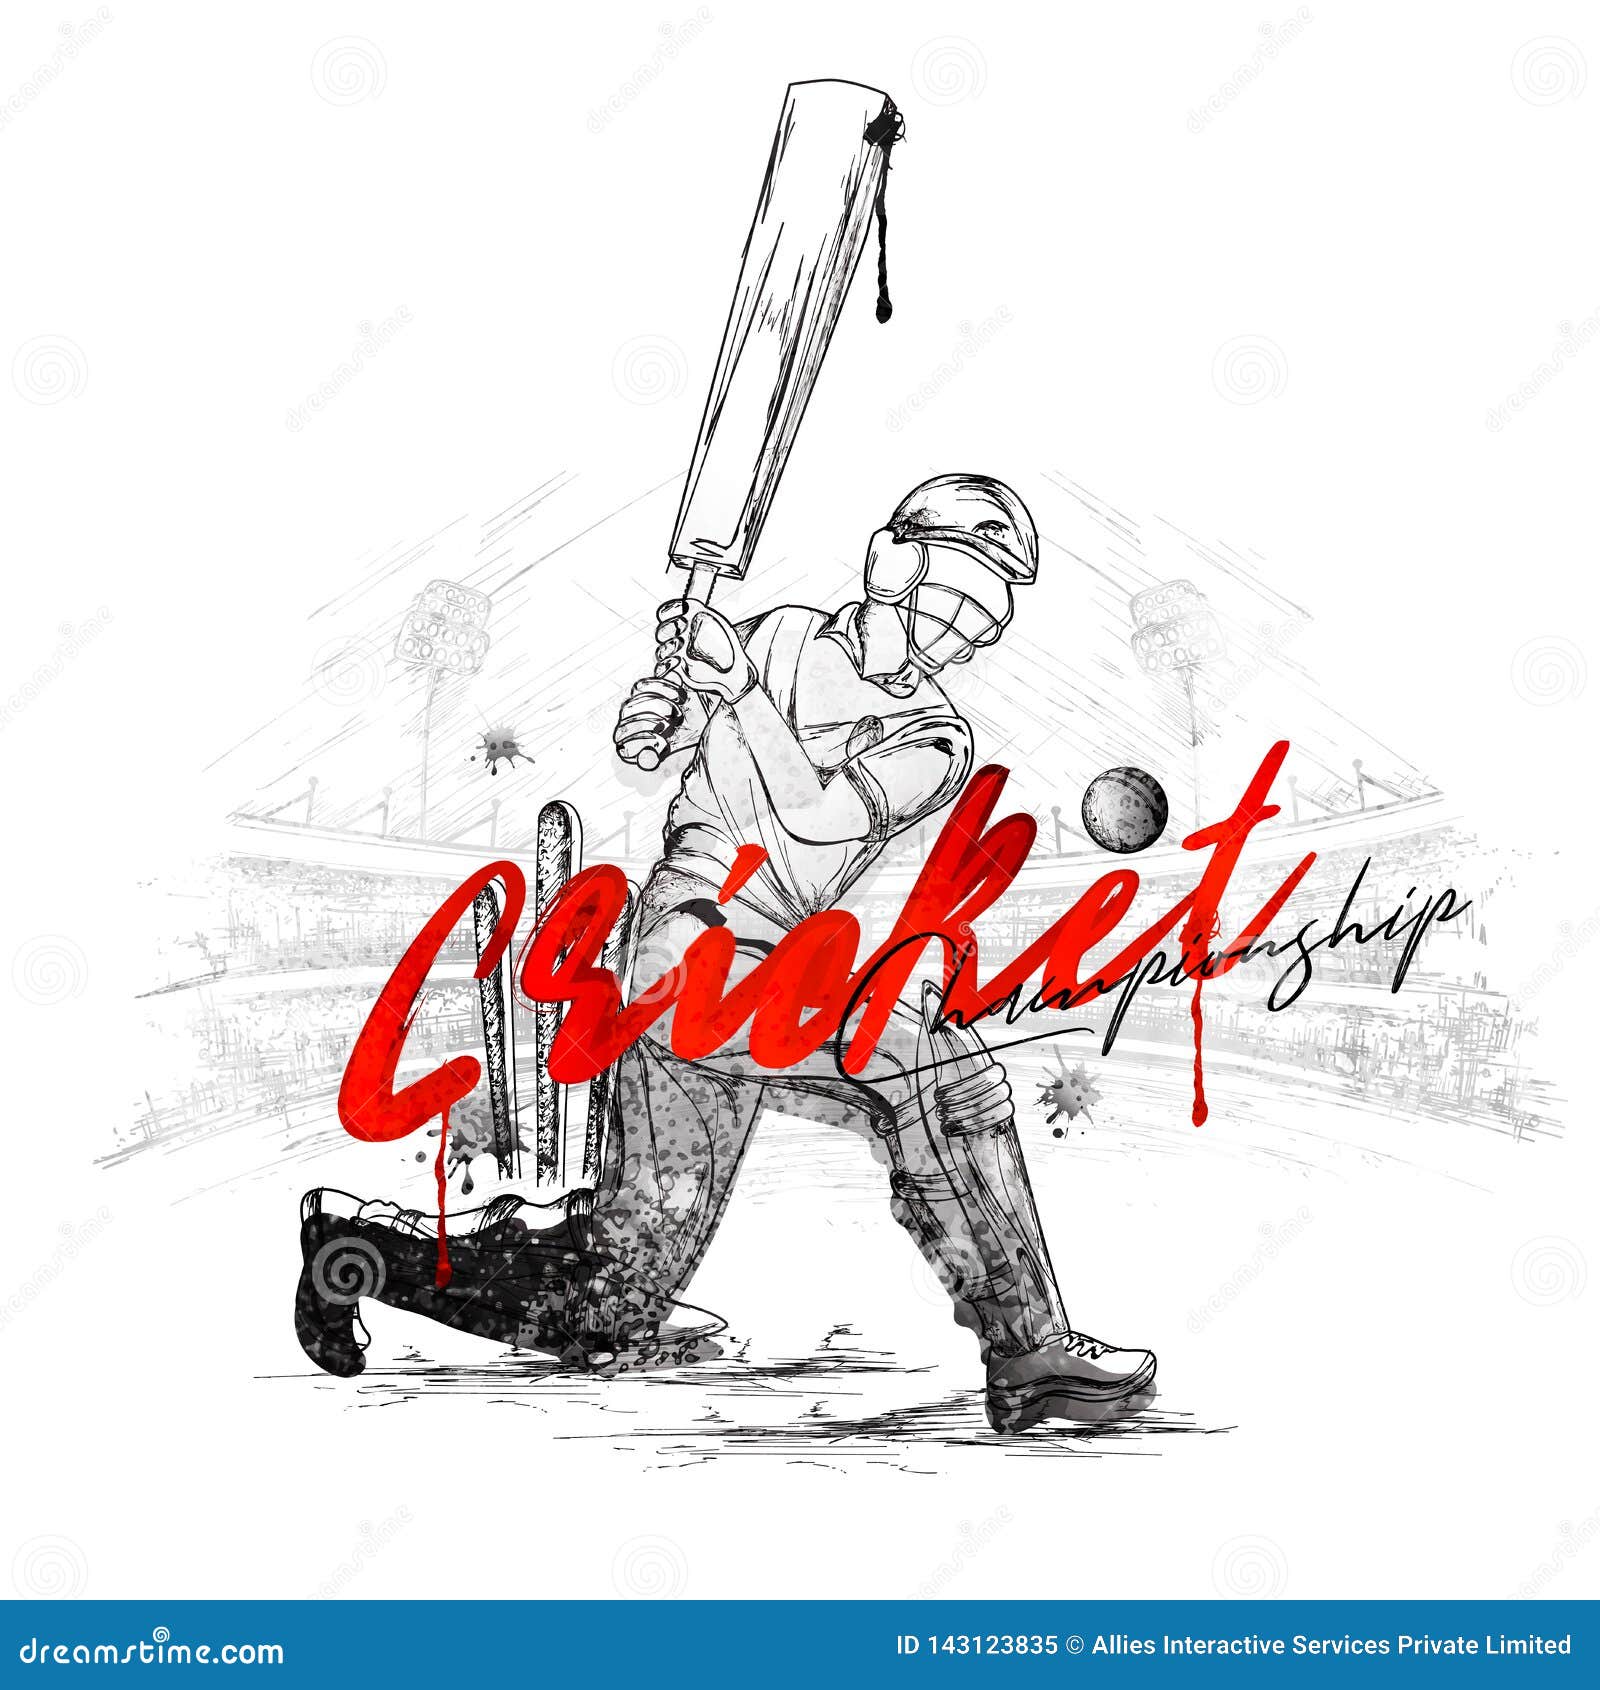 FORTRESS Original Cricket Bat Cover | Net World Sports